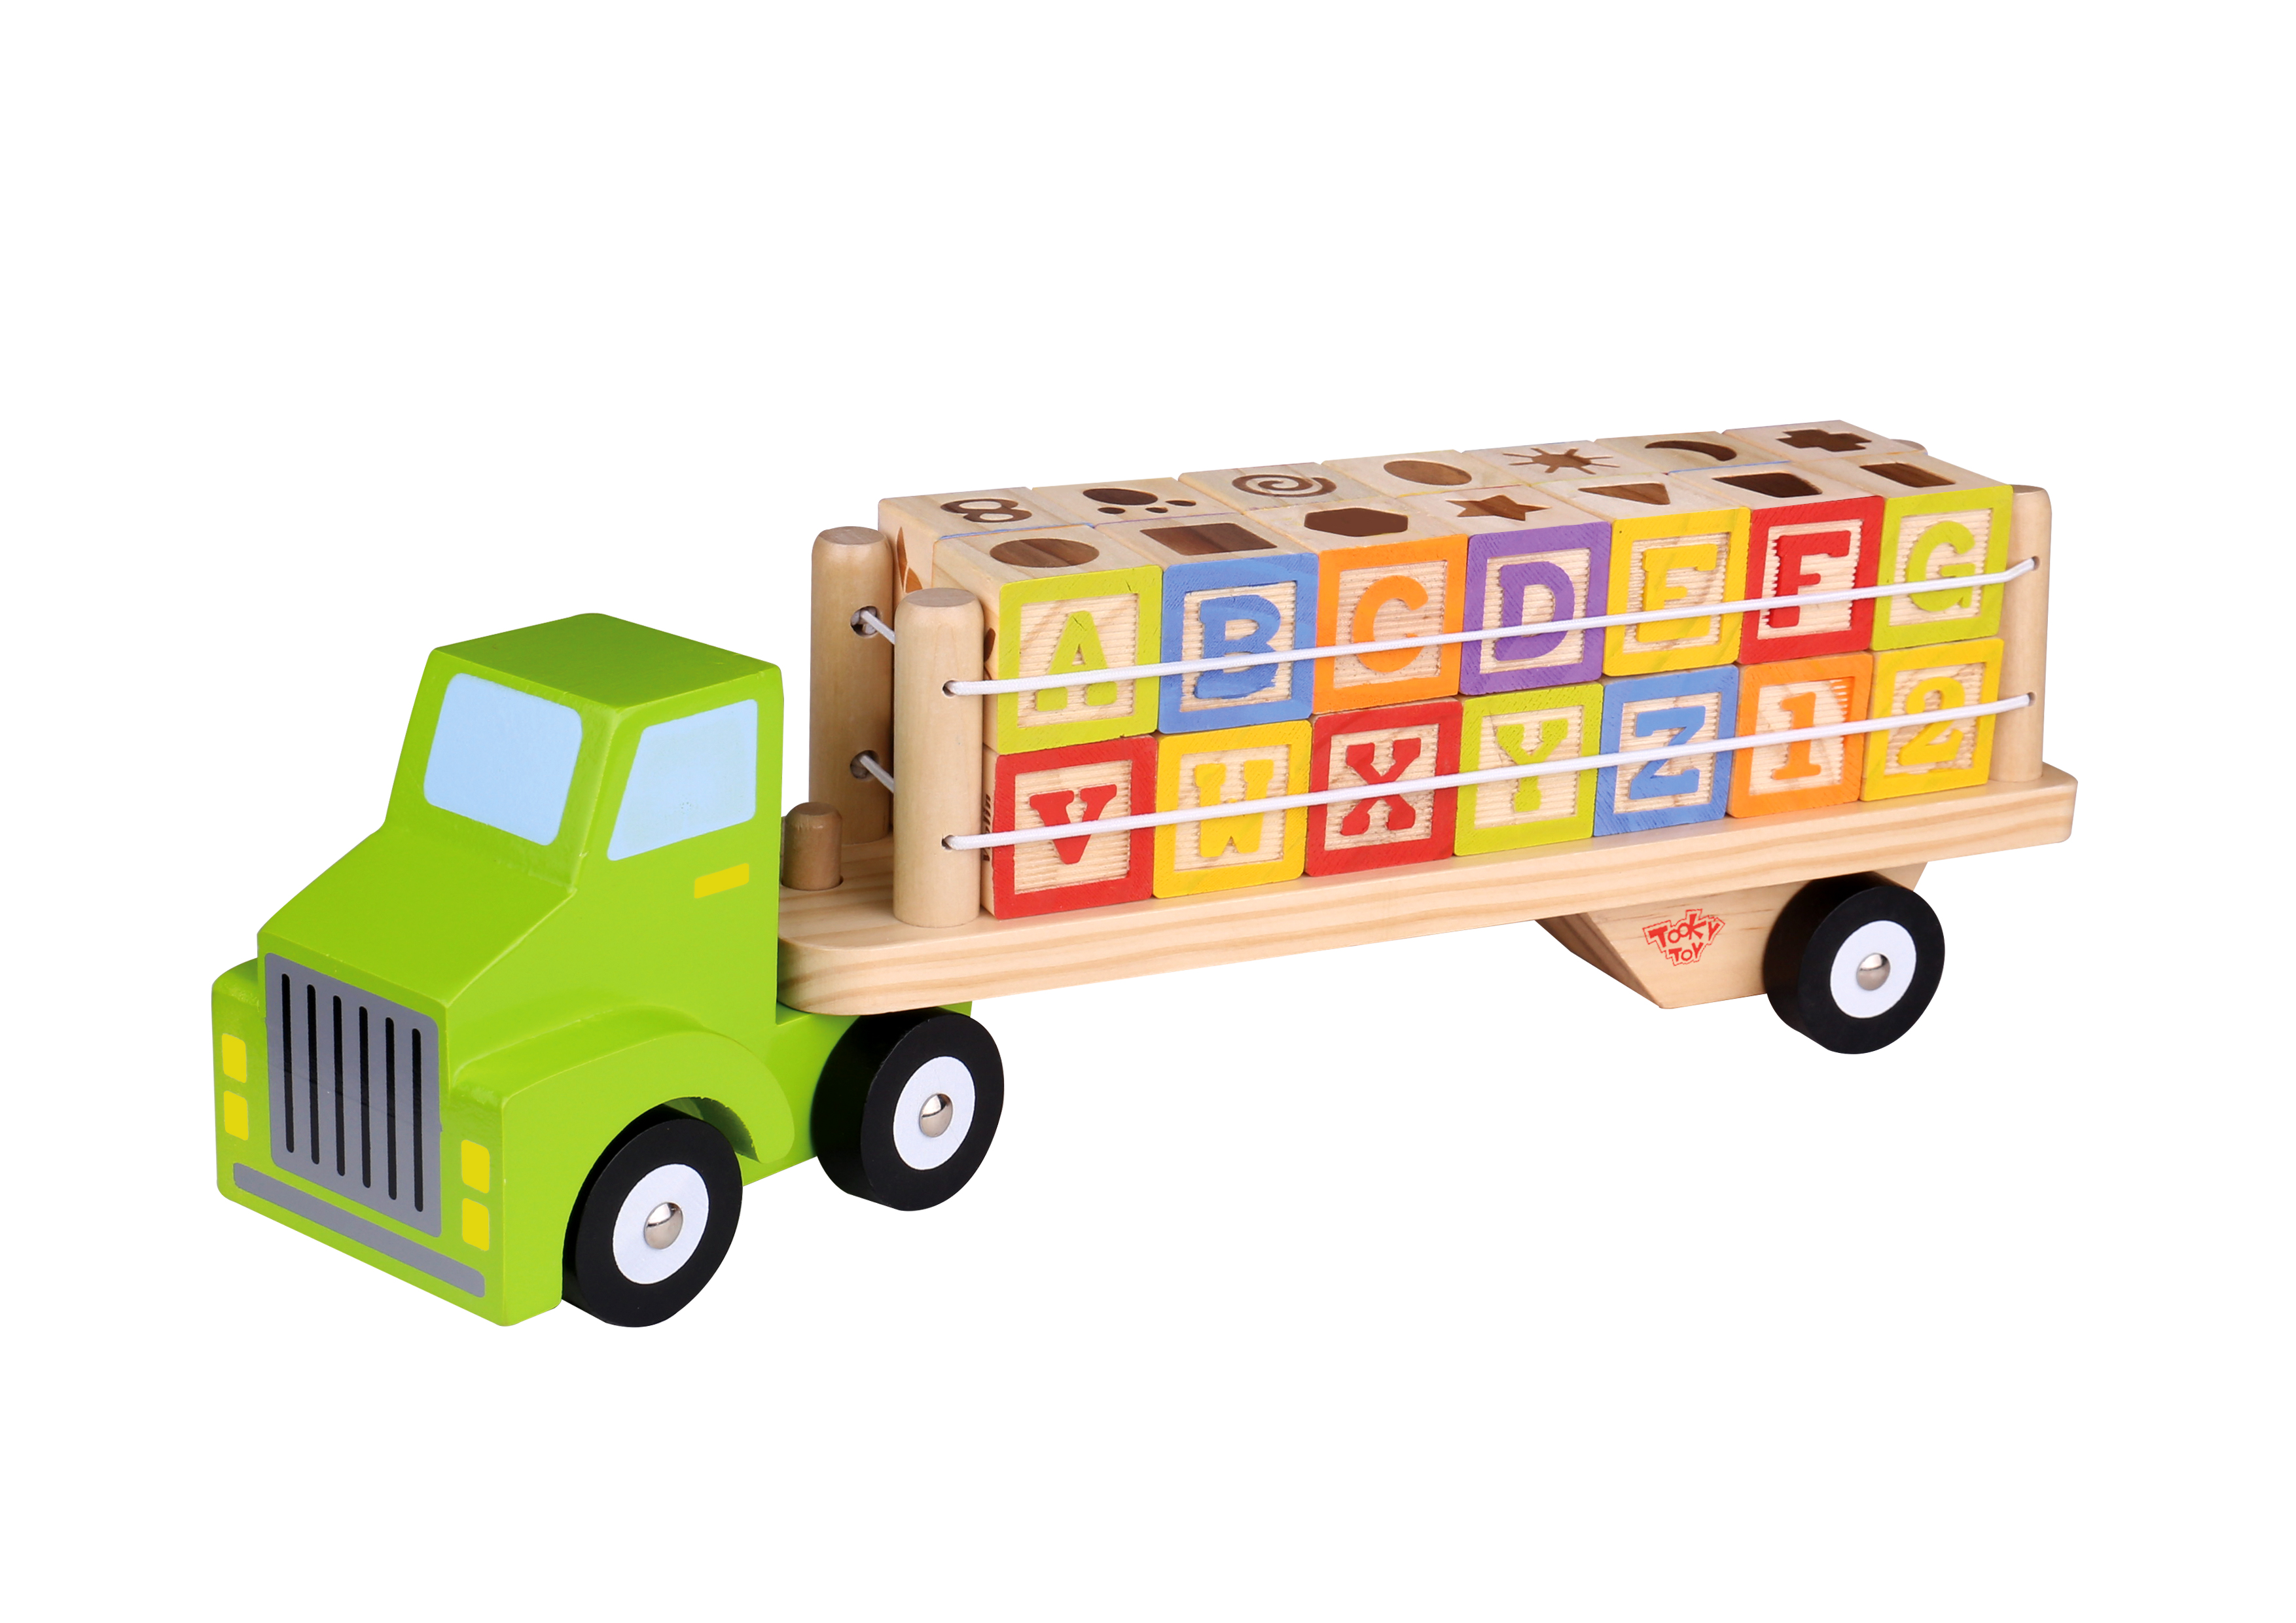 Camion cu cuburi litere si cifre tooky toy